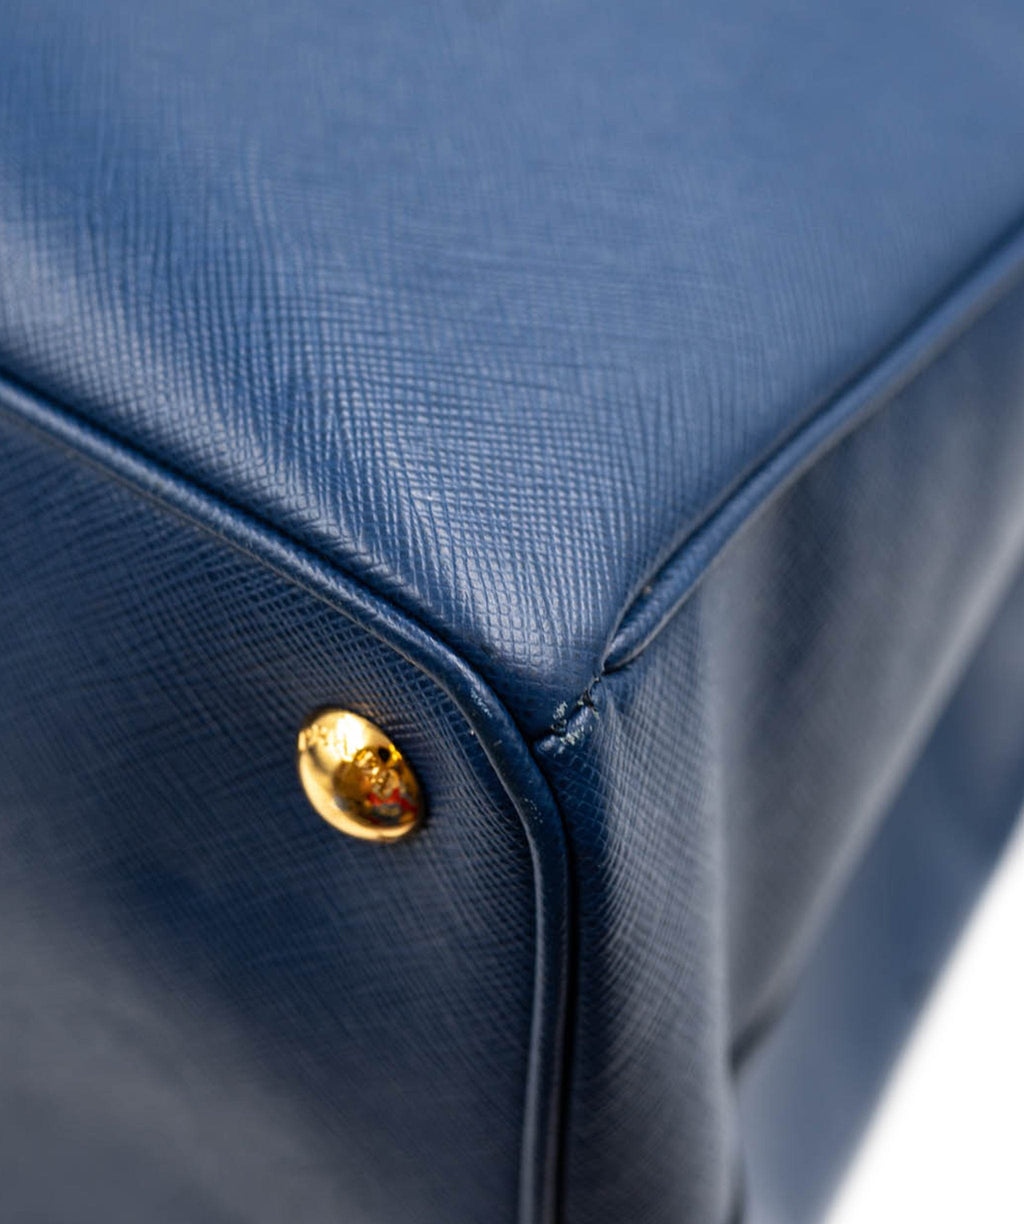 Galleria leather handbag Prada Blue in Leather - 34551997